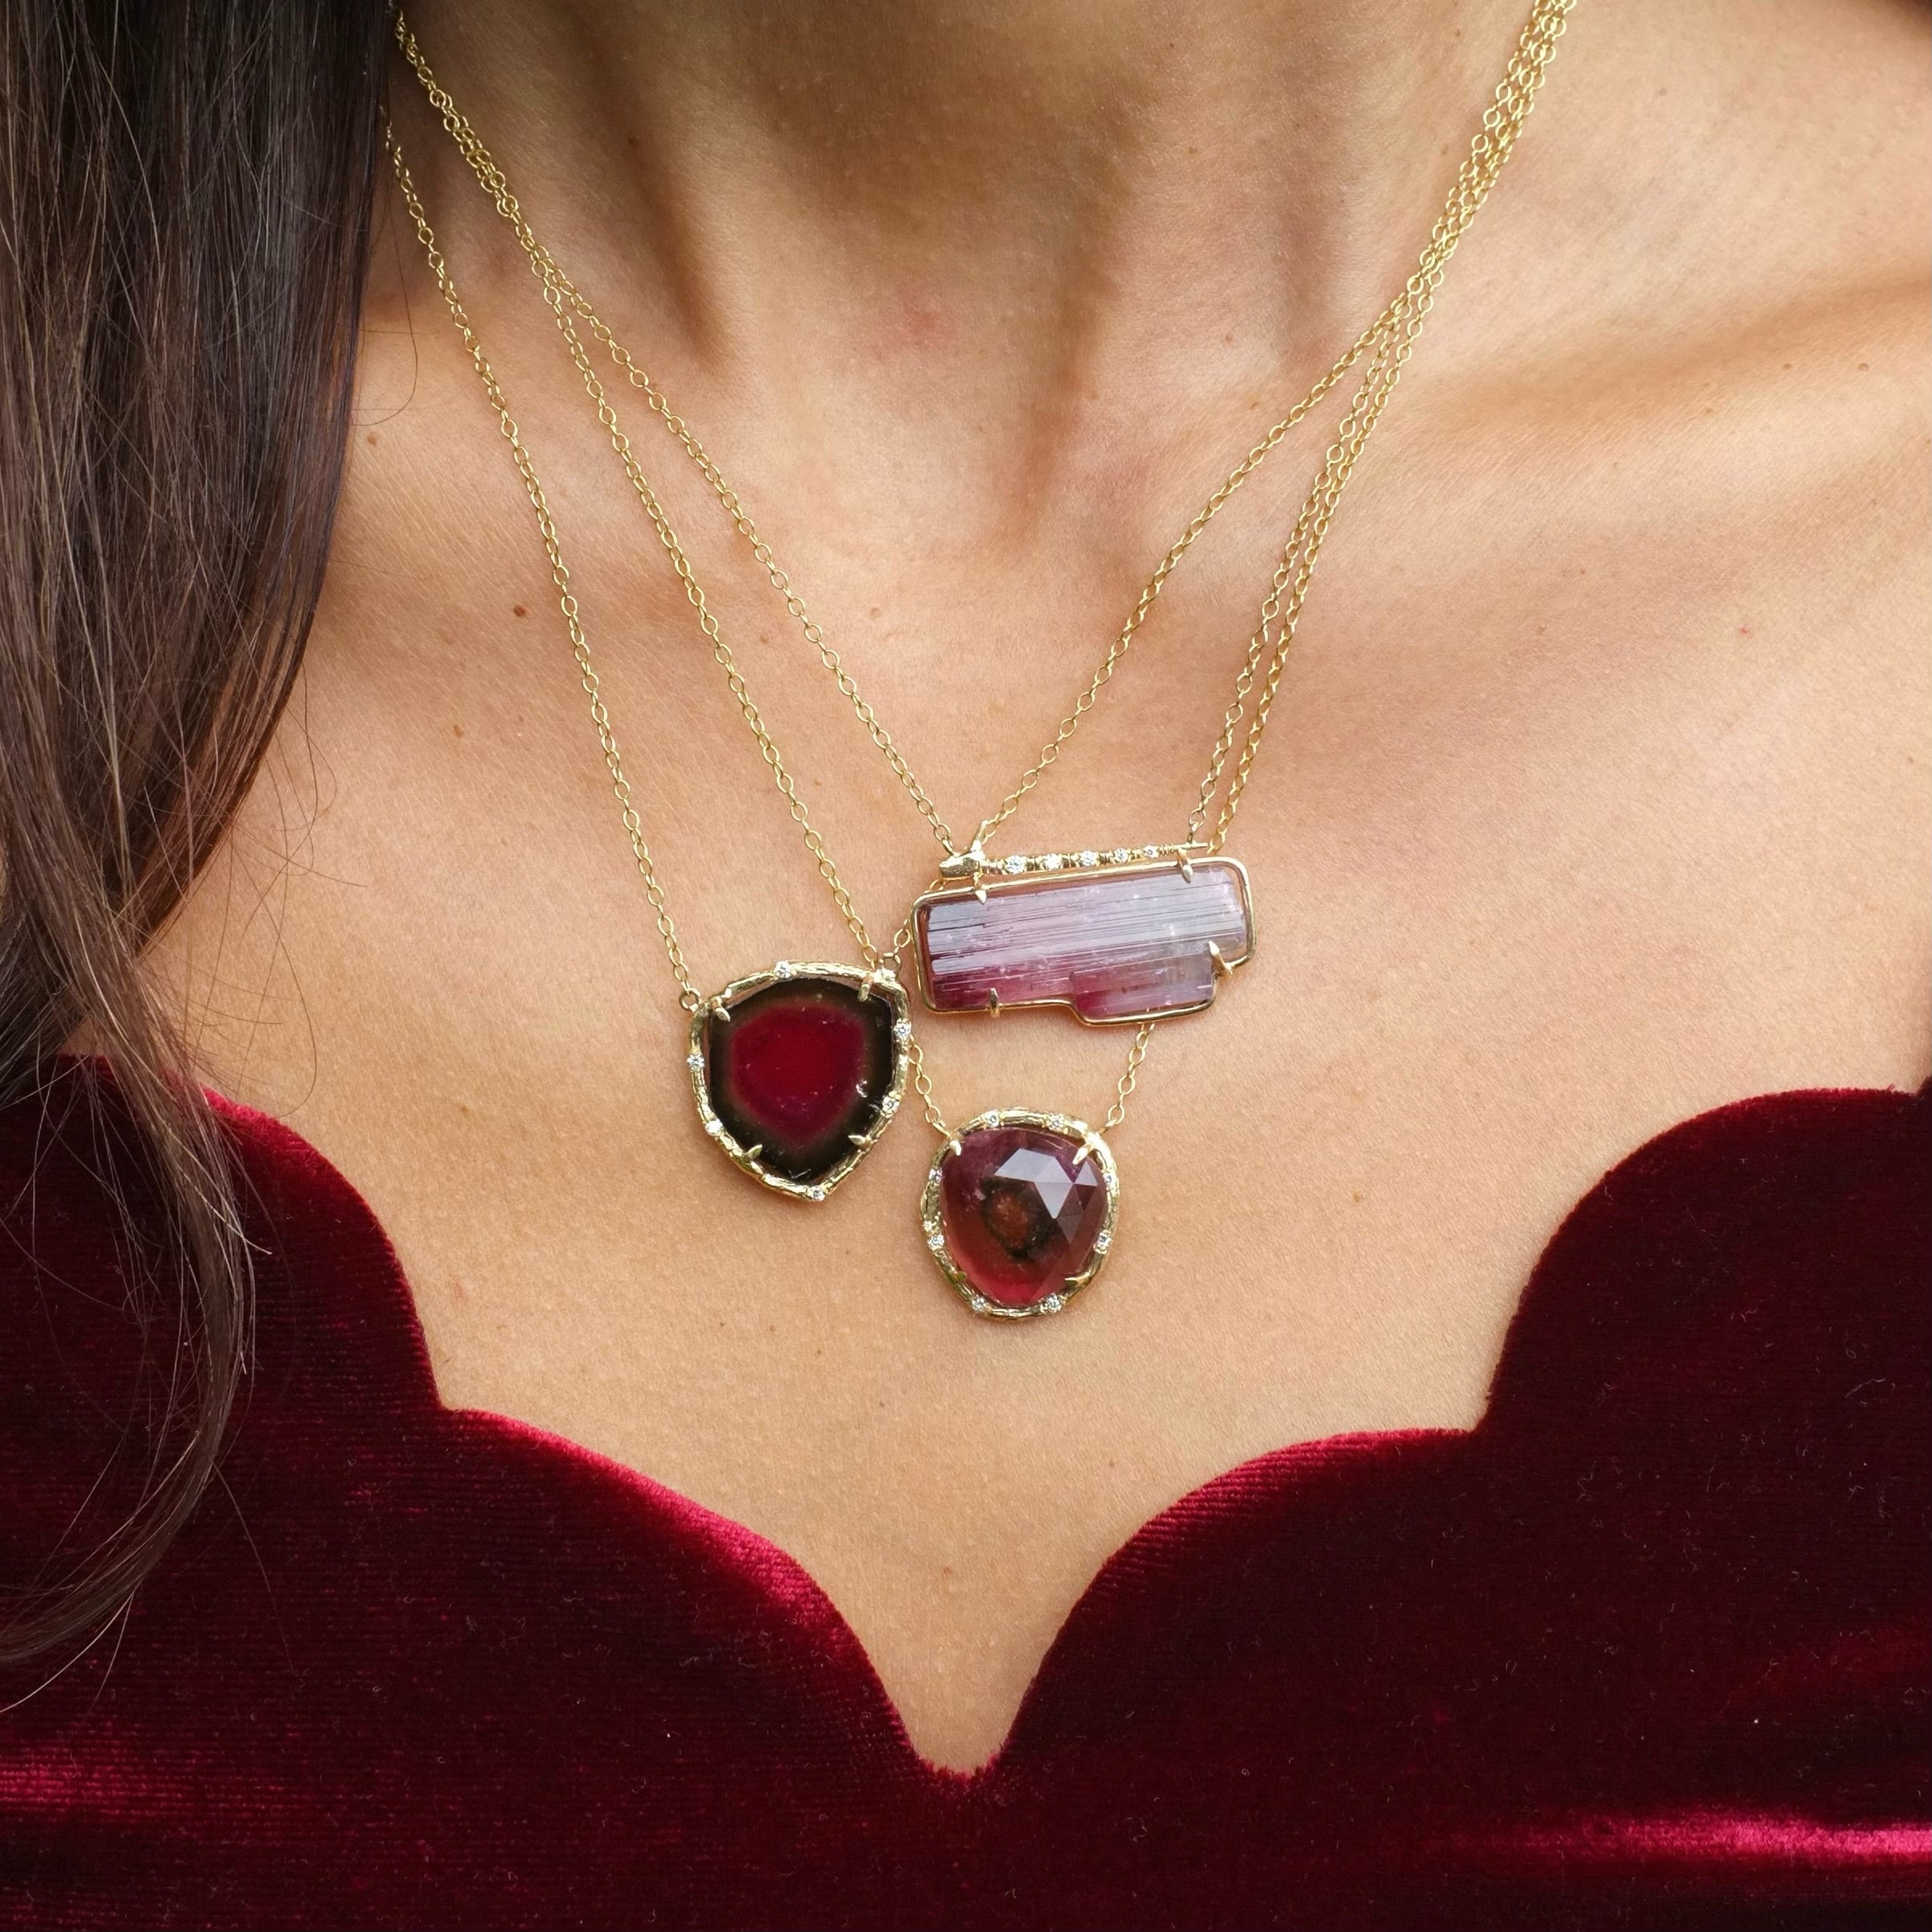 Rosecut Tourmaline Necklace Pendant Elisabeth Bell Jewelry   